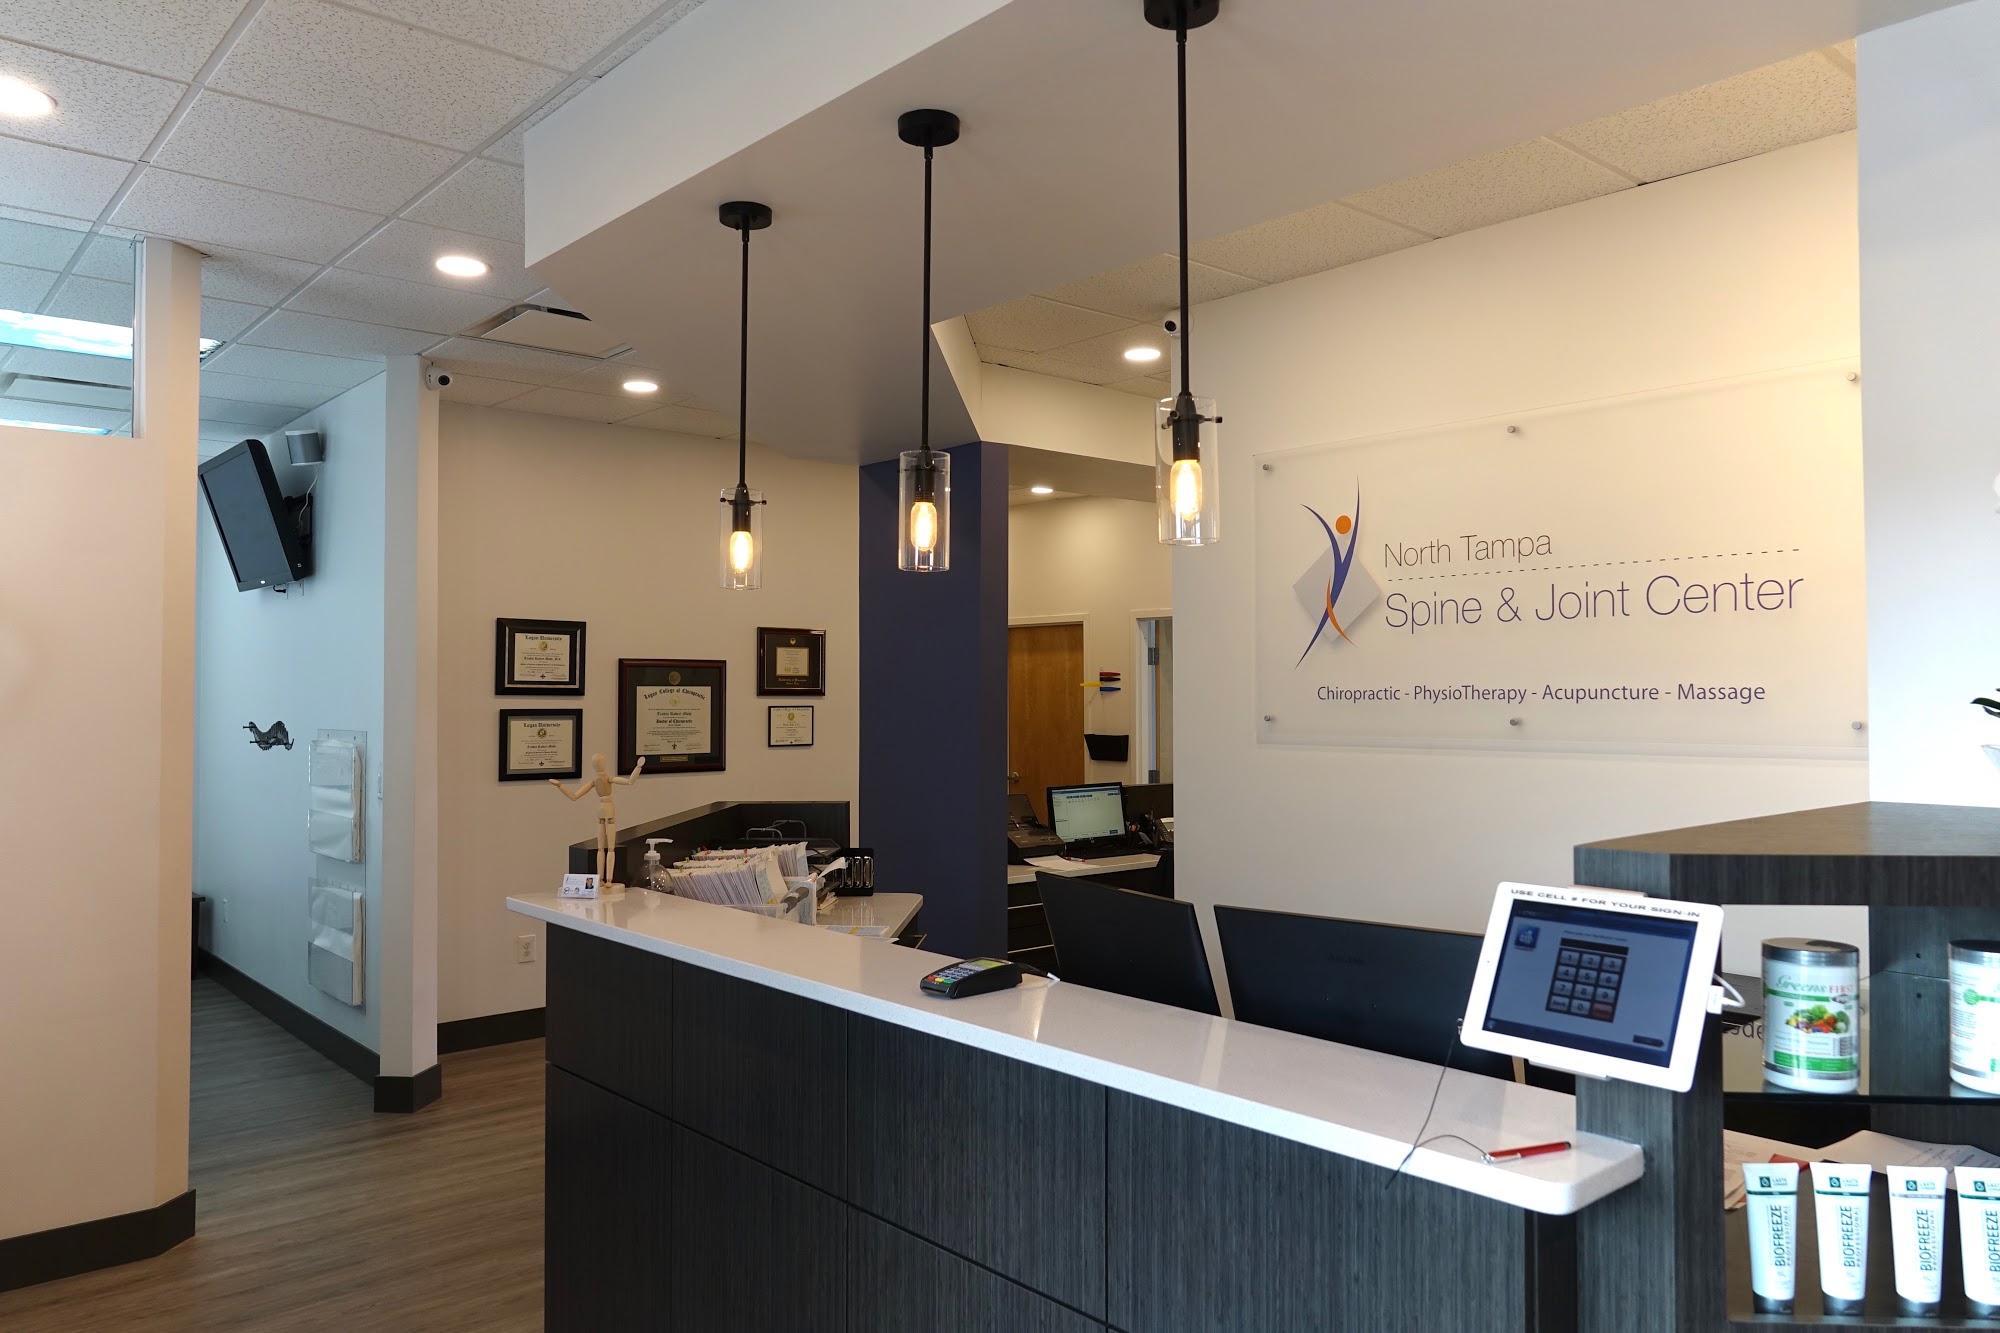 North Tampa Spine & Joint Center (Chiropractor - Acupuncture - Massage)